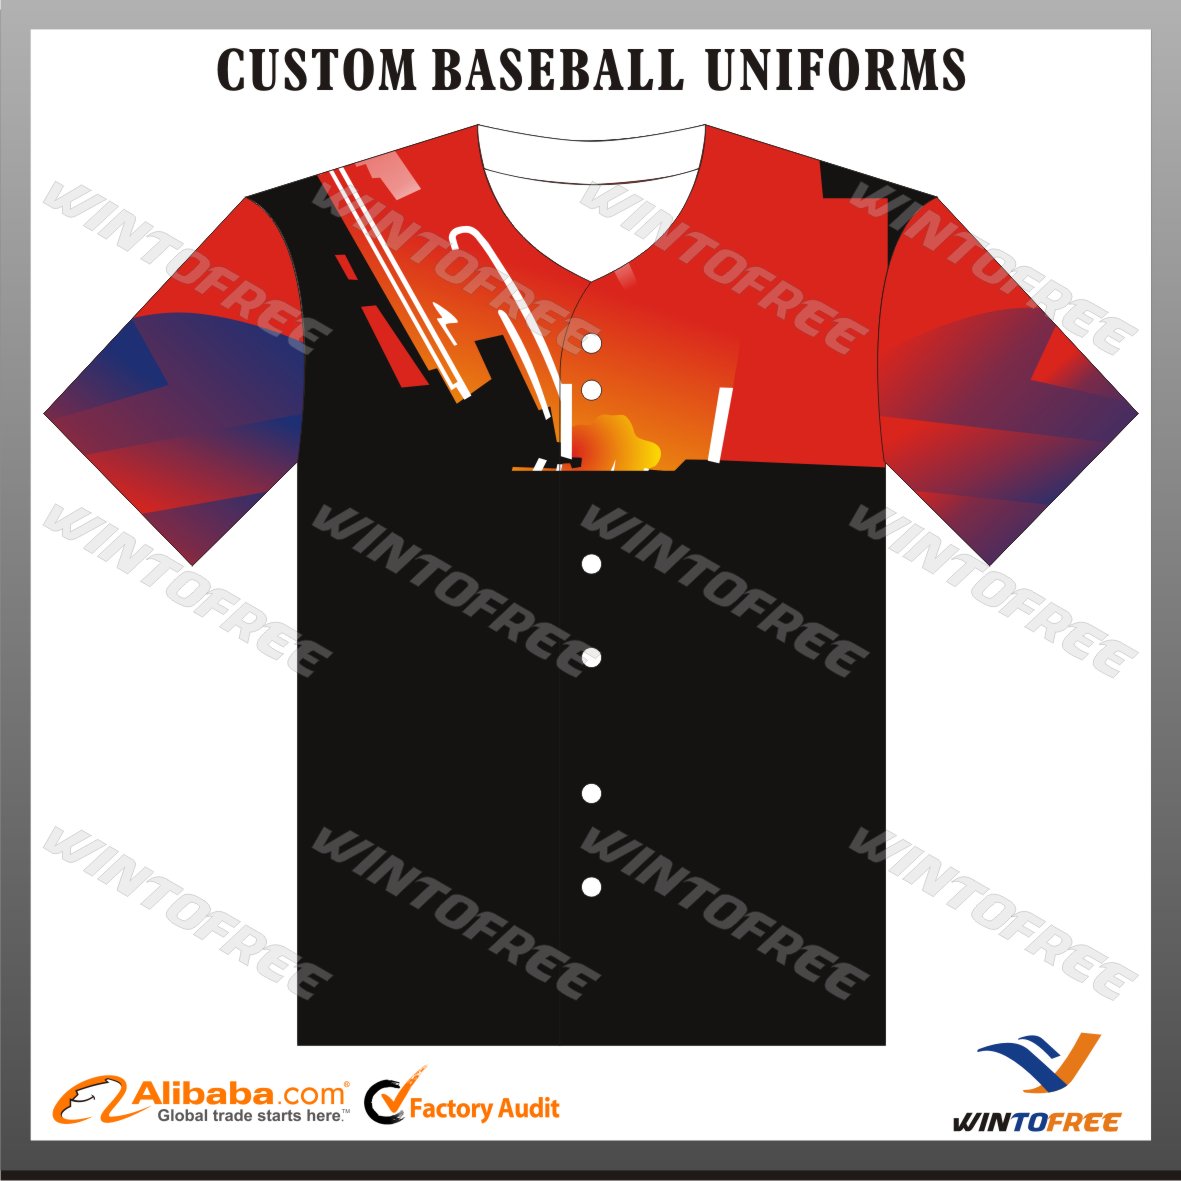 Baseball Uniform Suppliers 39